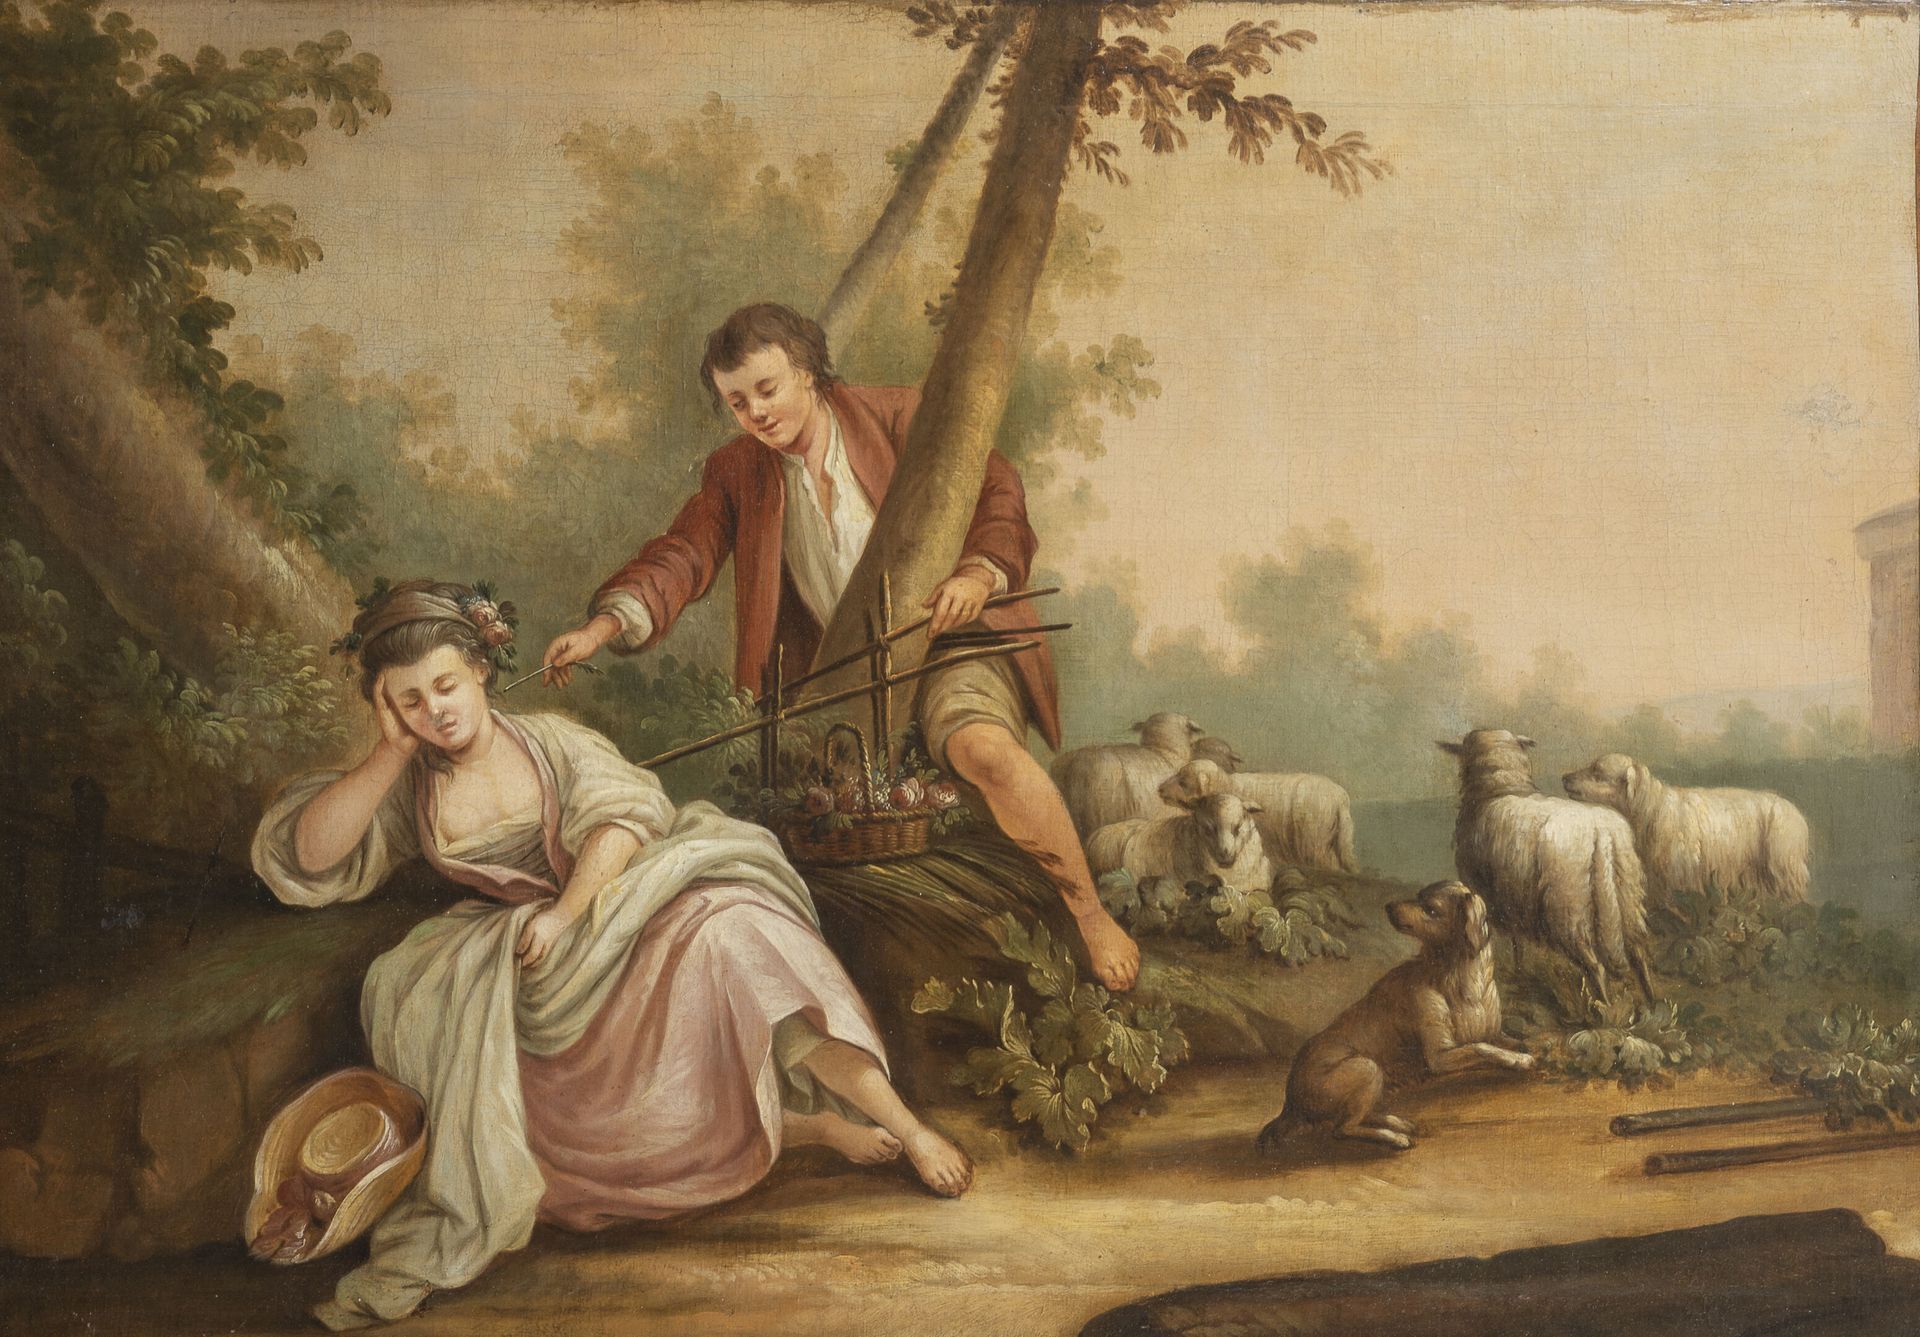 Ecole dans le goût du XVIIIème siècle 牧羊人给一个昏昏欲睡的年轻女子搔痒。

布面油画。

无符号。

62 x 88厘米&hellip;